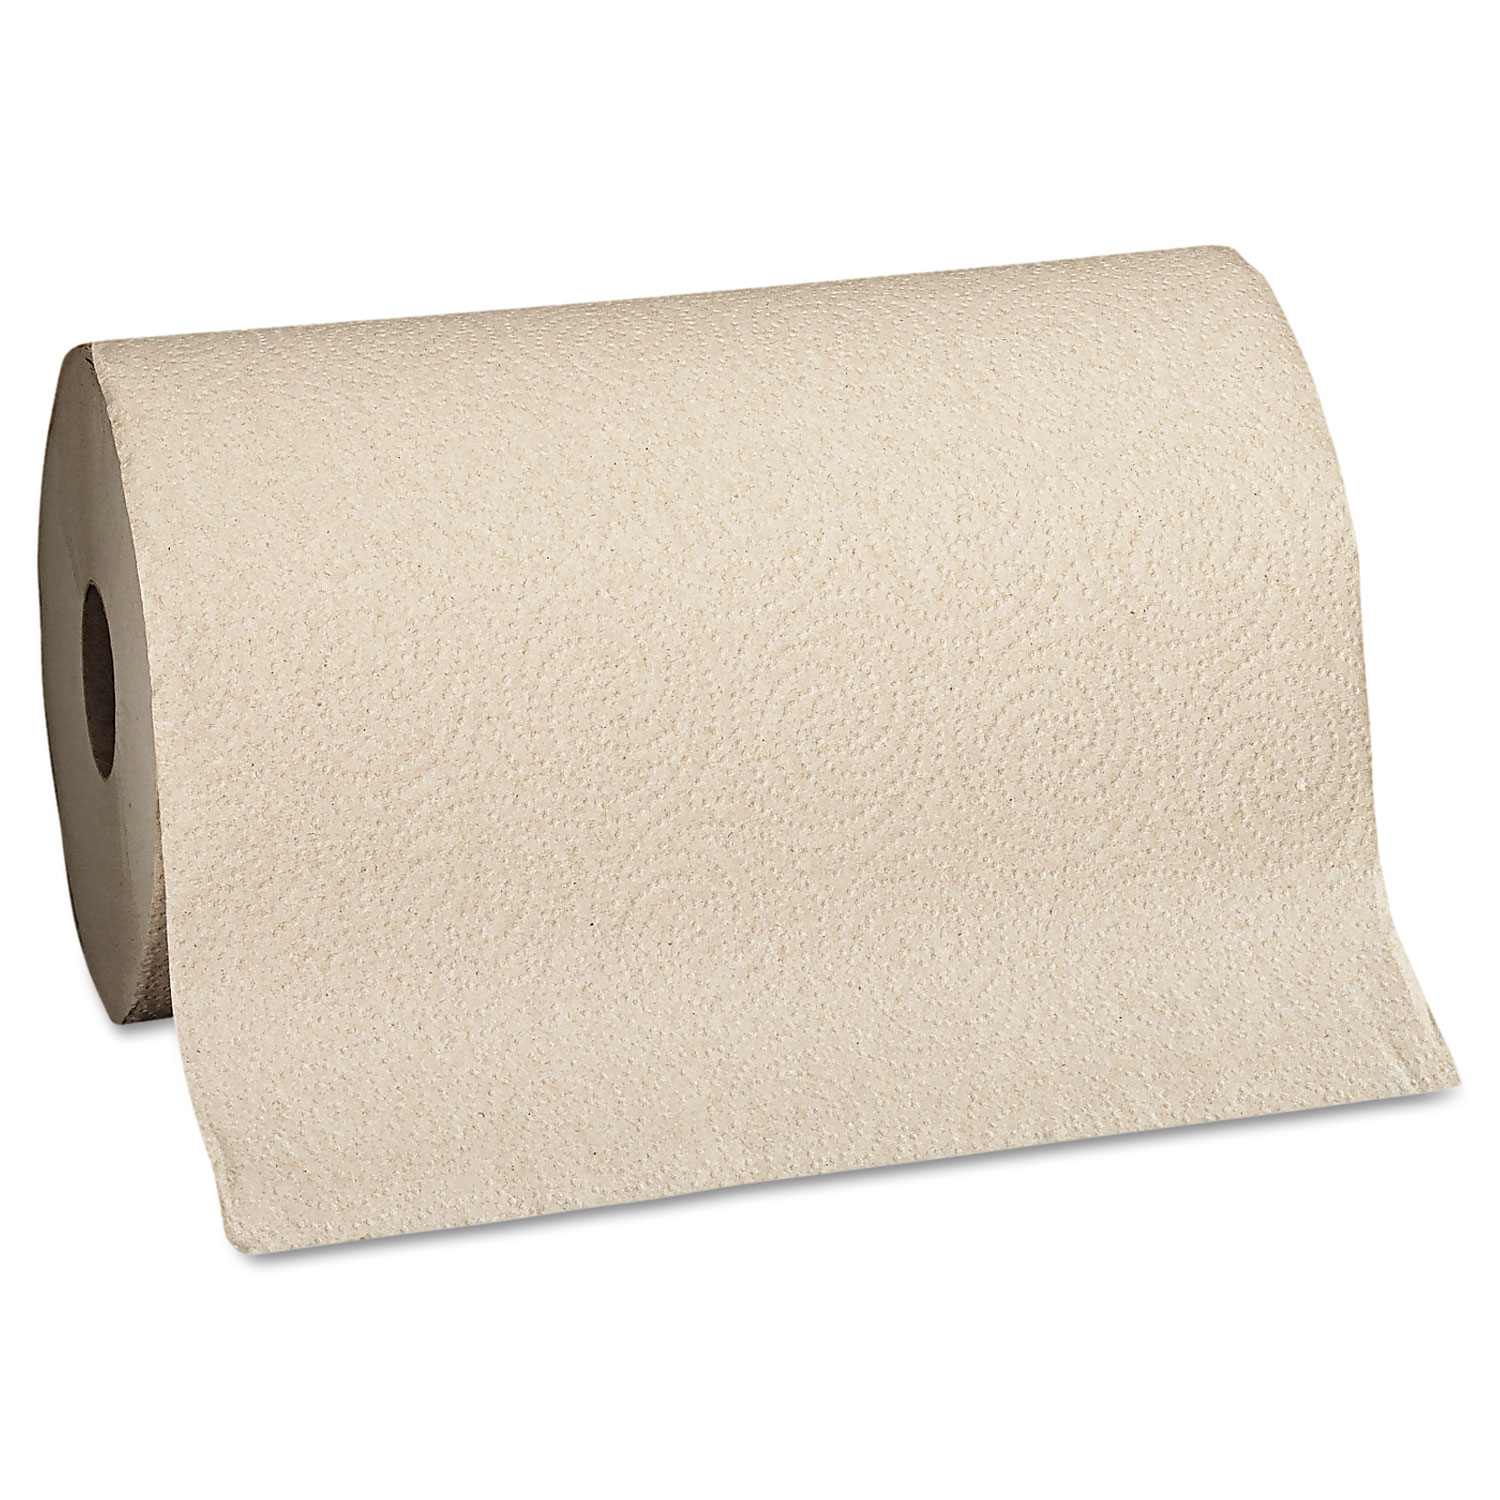 Perforated Paper Towel, 11 x 8 4/5, Brown, 250/Roll, 12/Packs/Carton